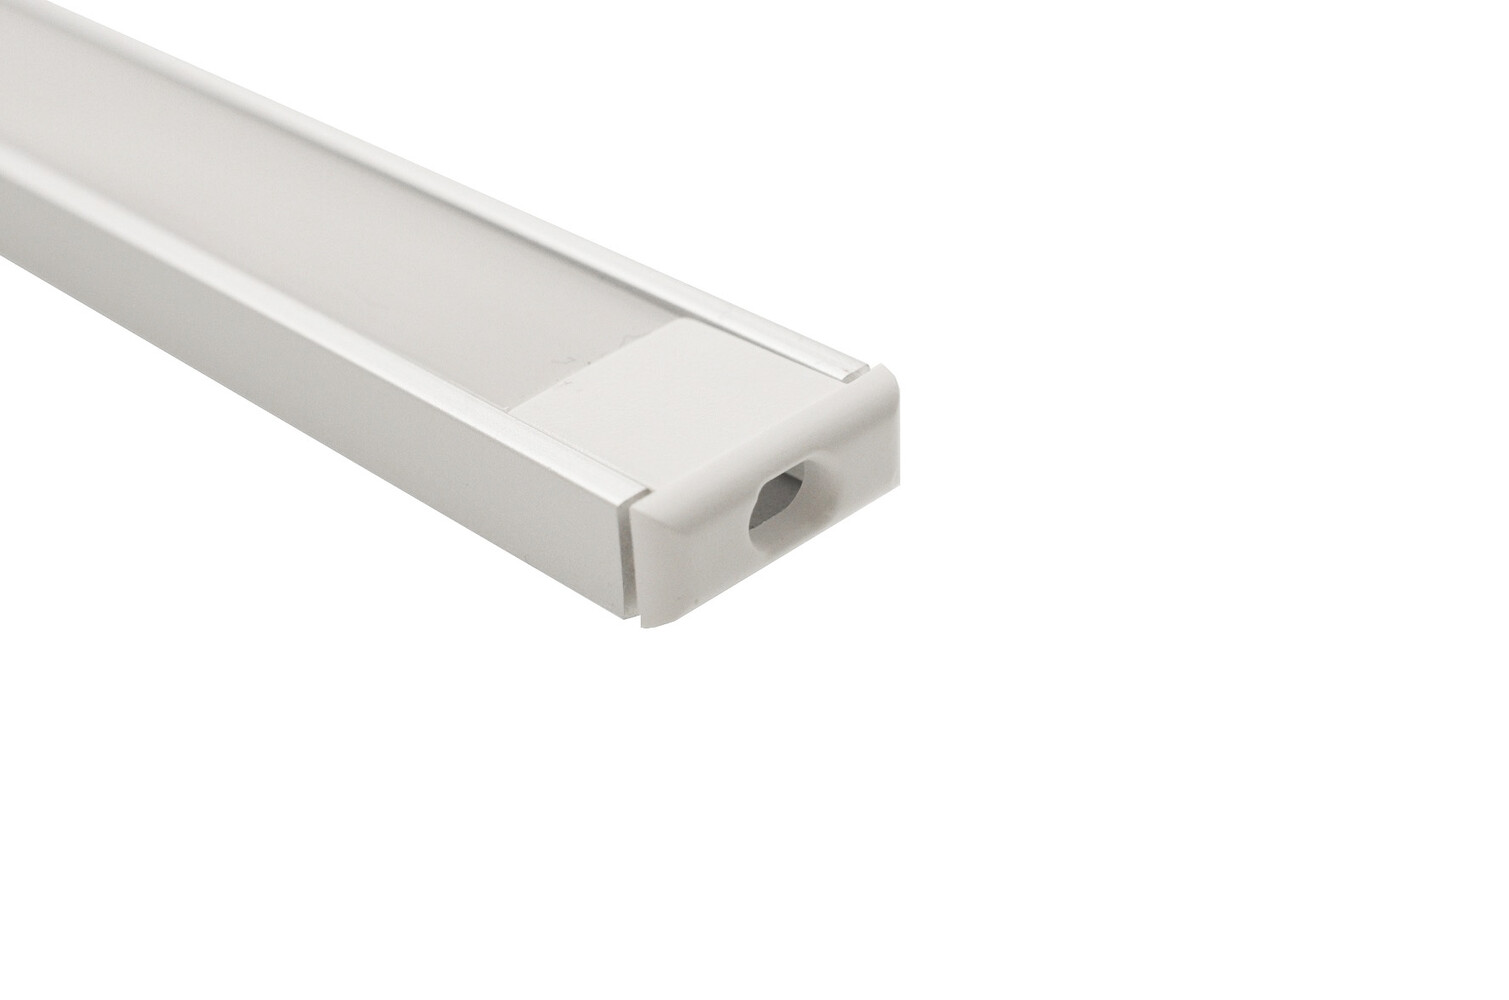 LED Alu Profile Einbauprofil / Flügel-Profil für 12 mm LED-Streifen - Rhein